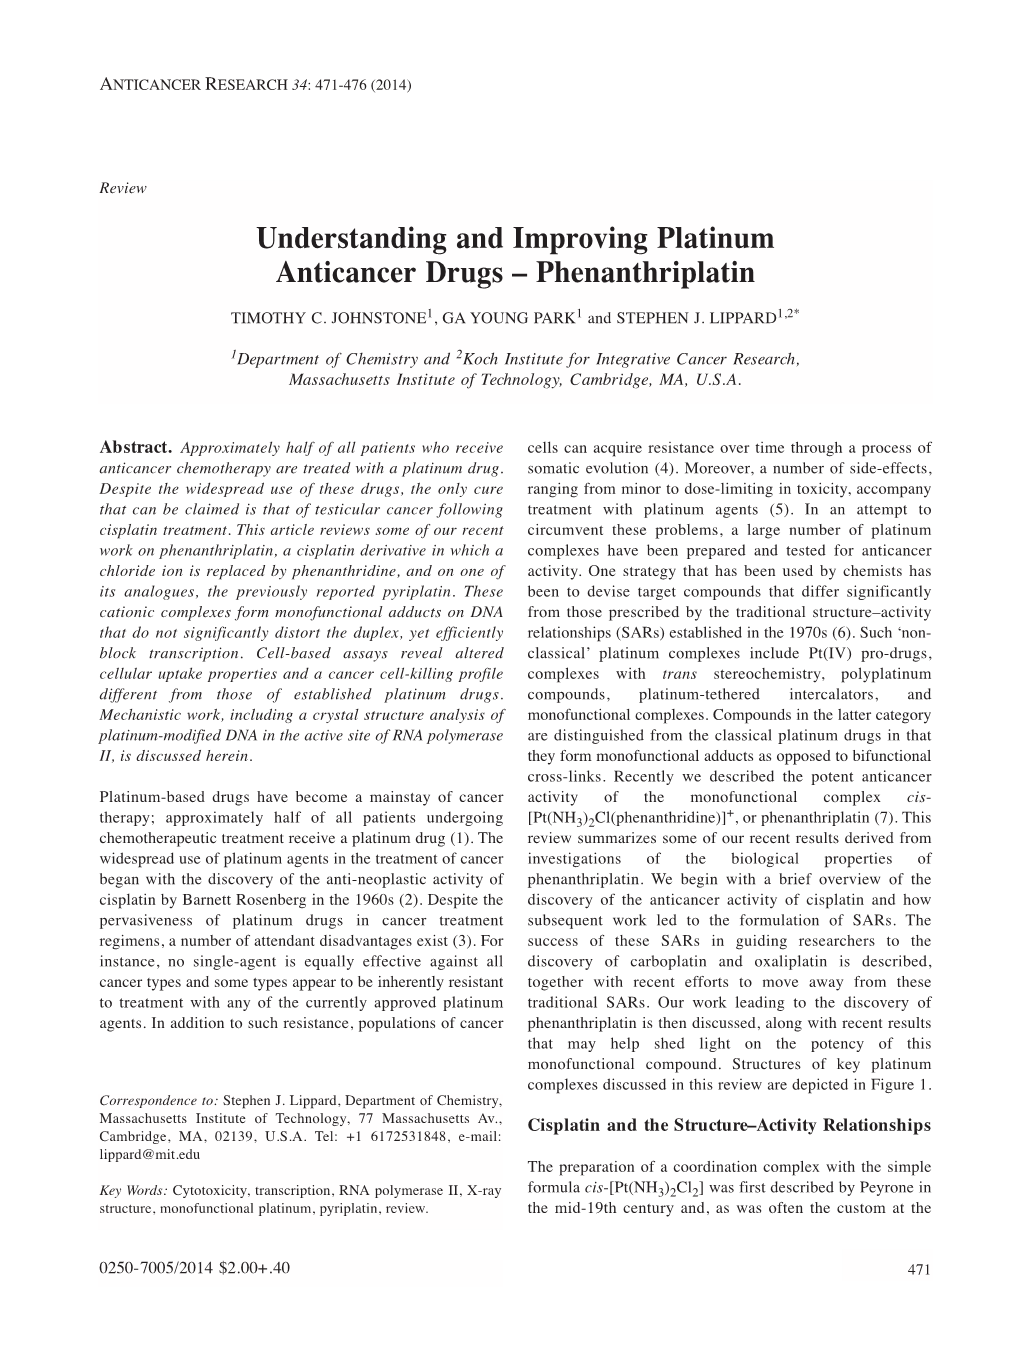 Understanding and Improving Platinum Anticancer Drugs – Phenanthriplatin